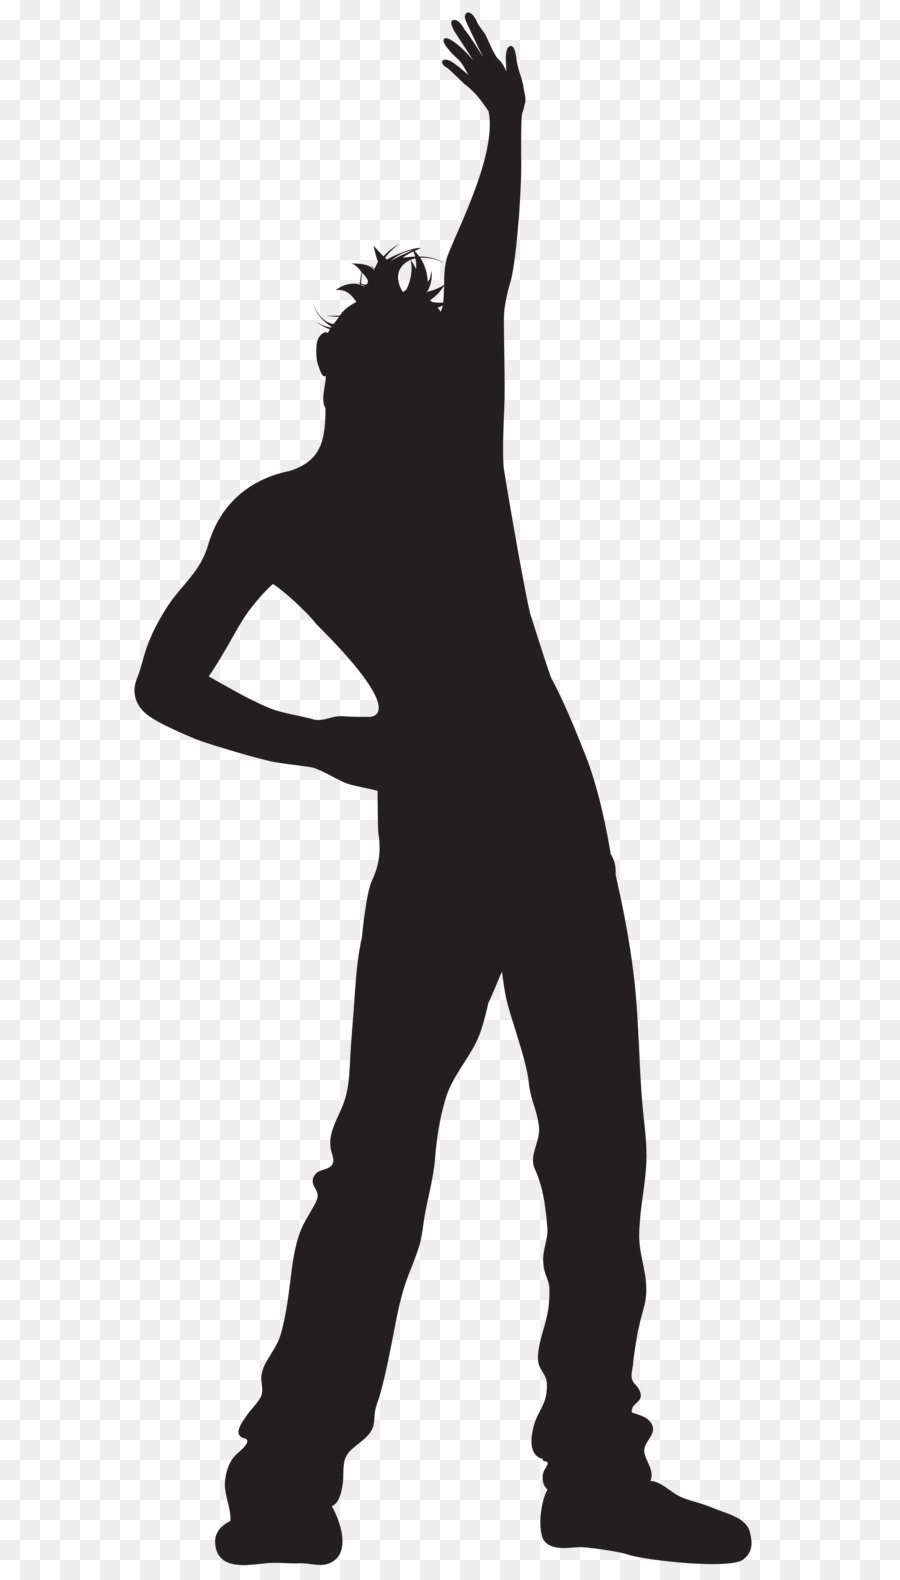 Silhouette Dance Clip art - Dancing Man Silhouette PNG Transparent Clip Art Image png download - 3314*8000 - Free Transparent Silhouette png Download.